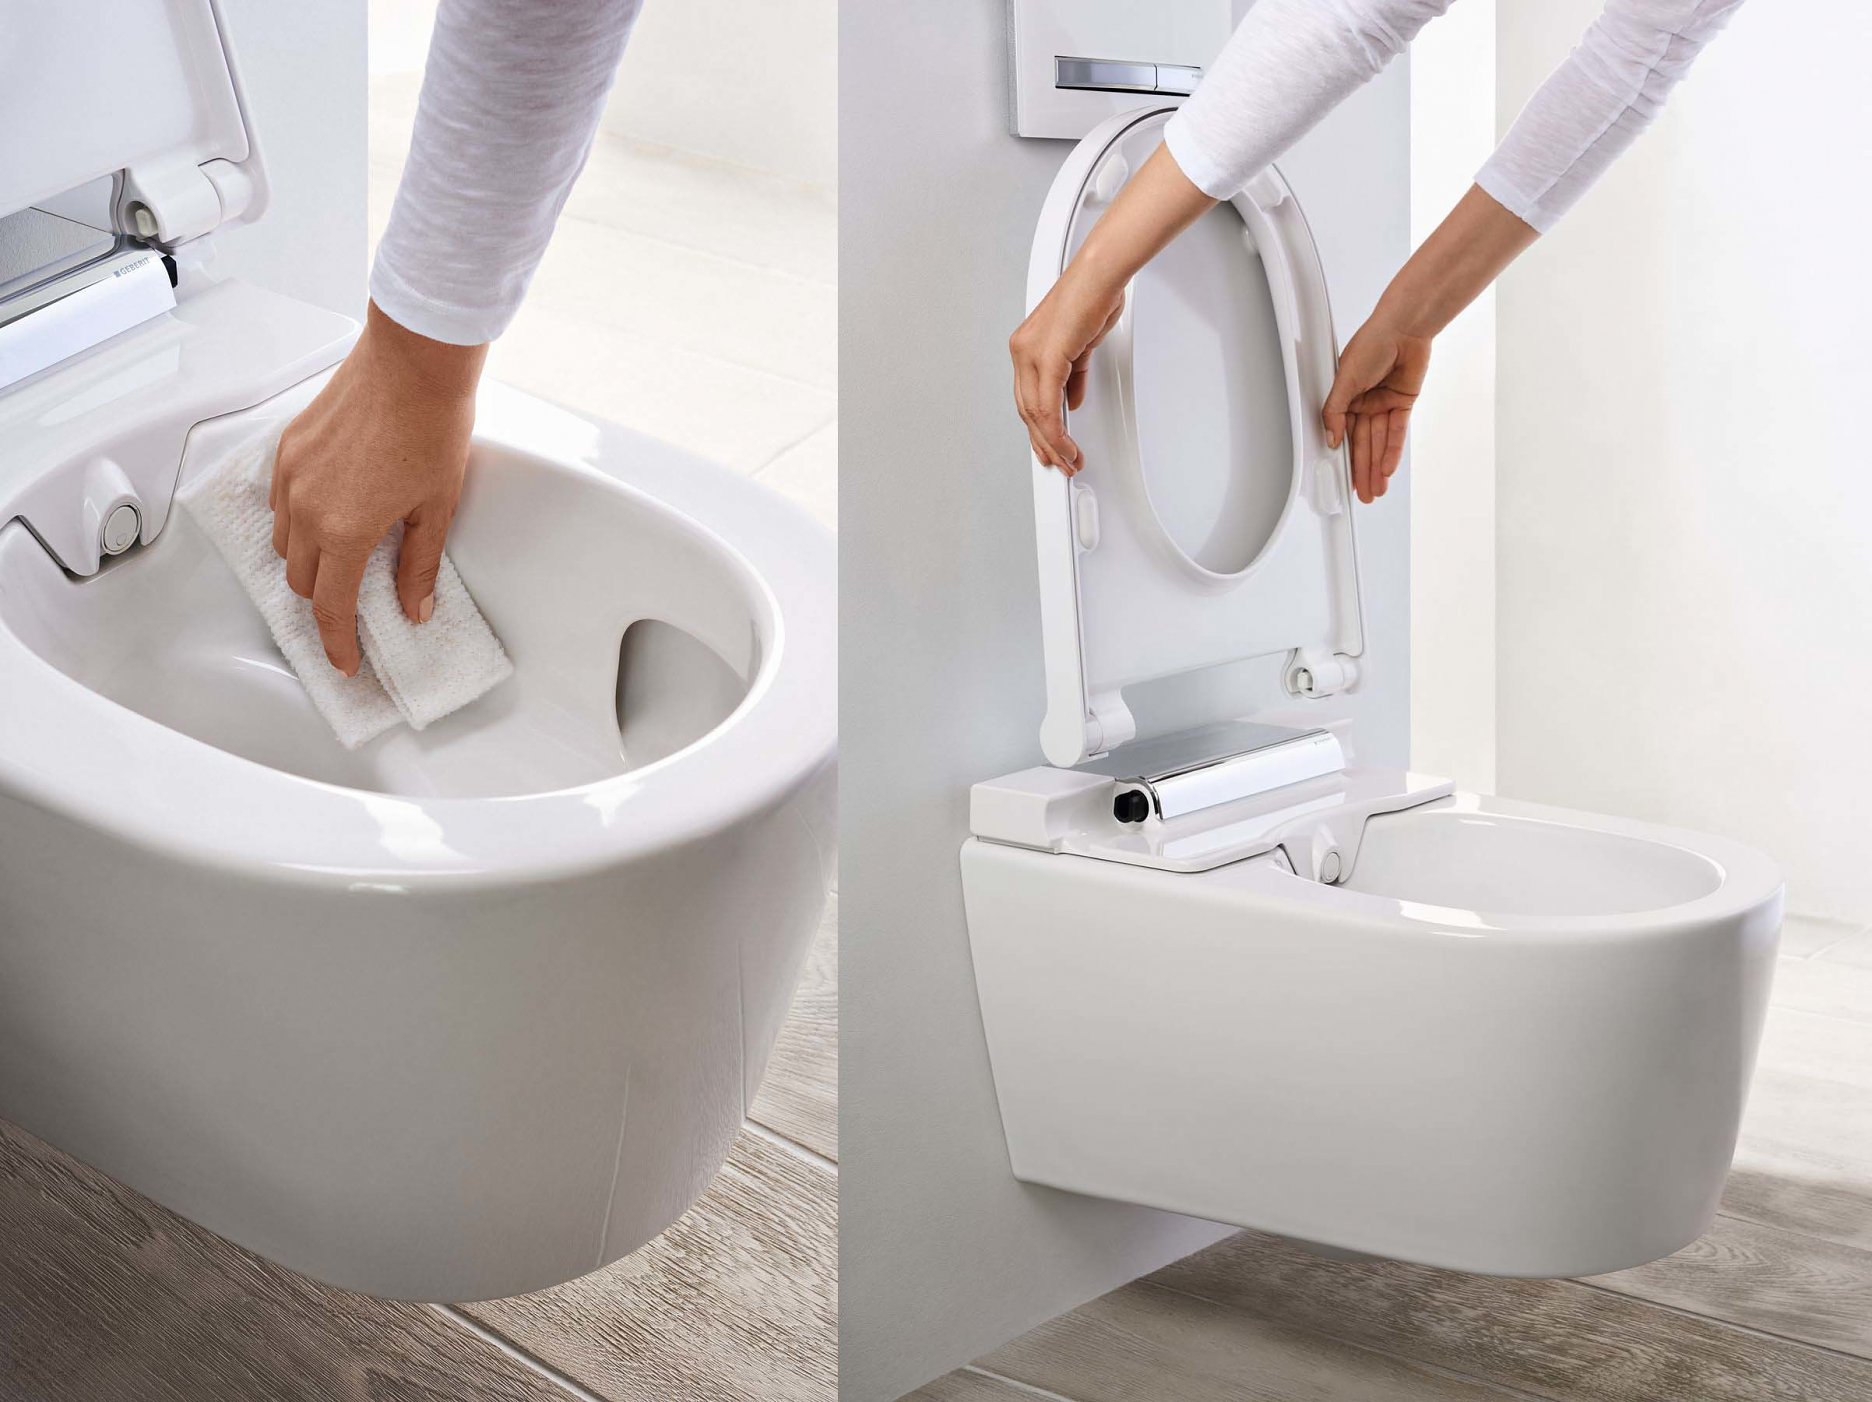 Jednoduché čistenie WC misy bez splachovacieho kruhu, jednoduché odnímanie WC krytu a sedadla